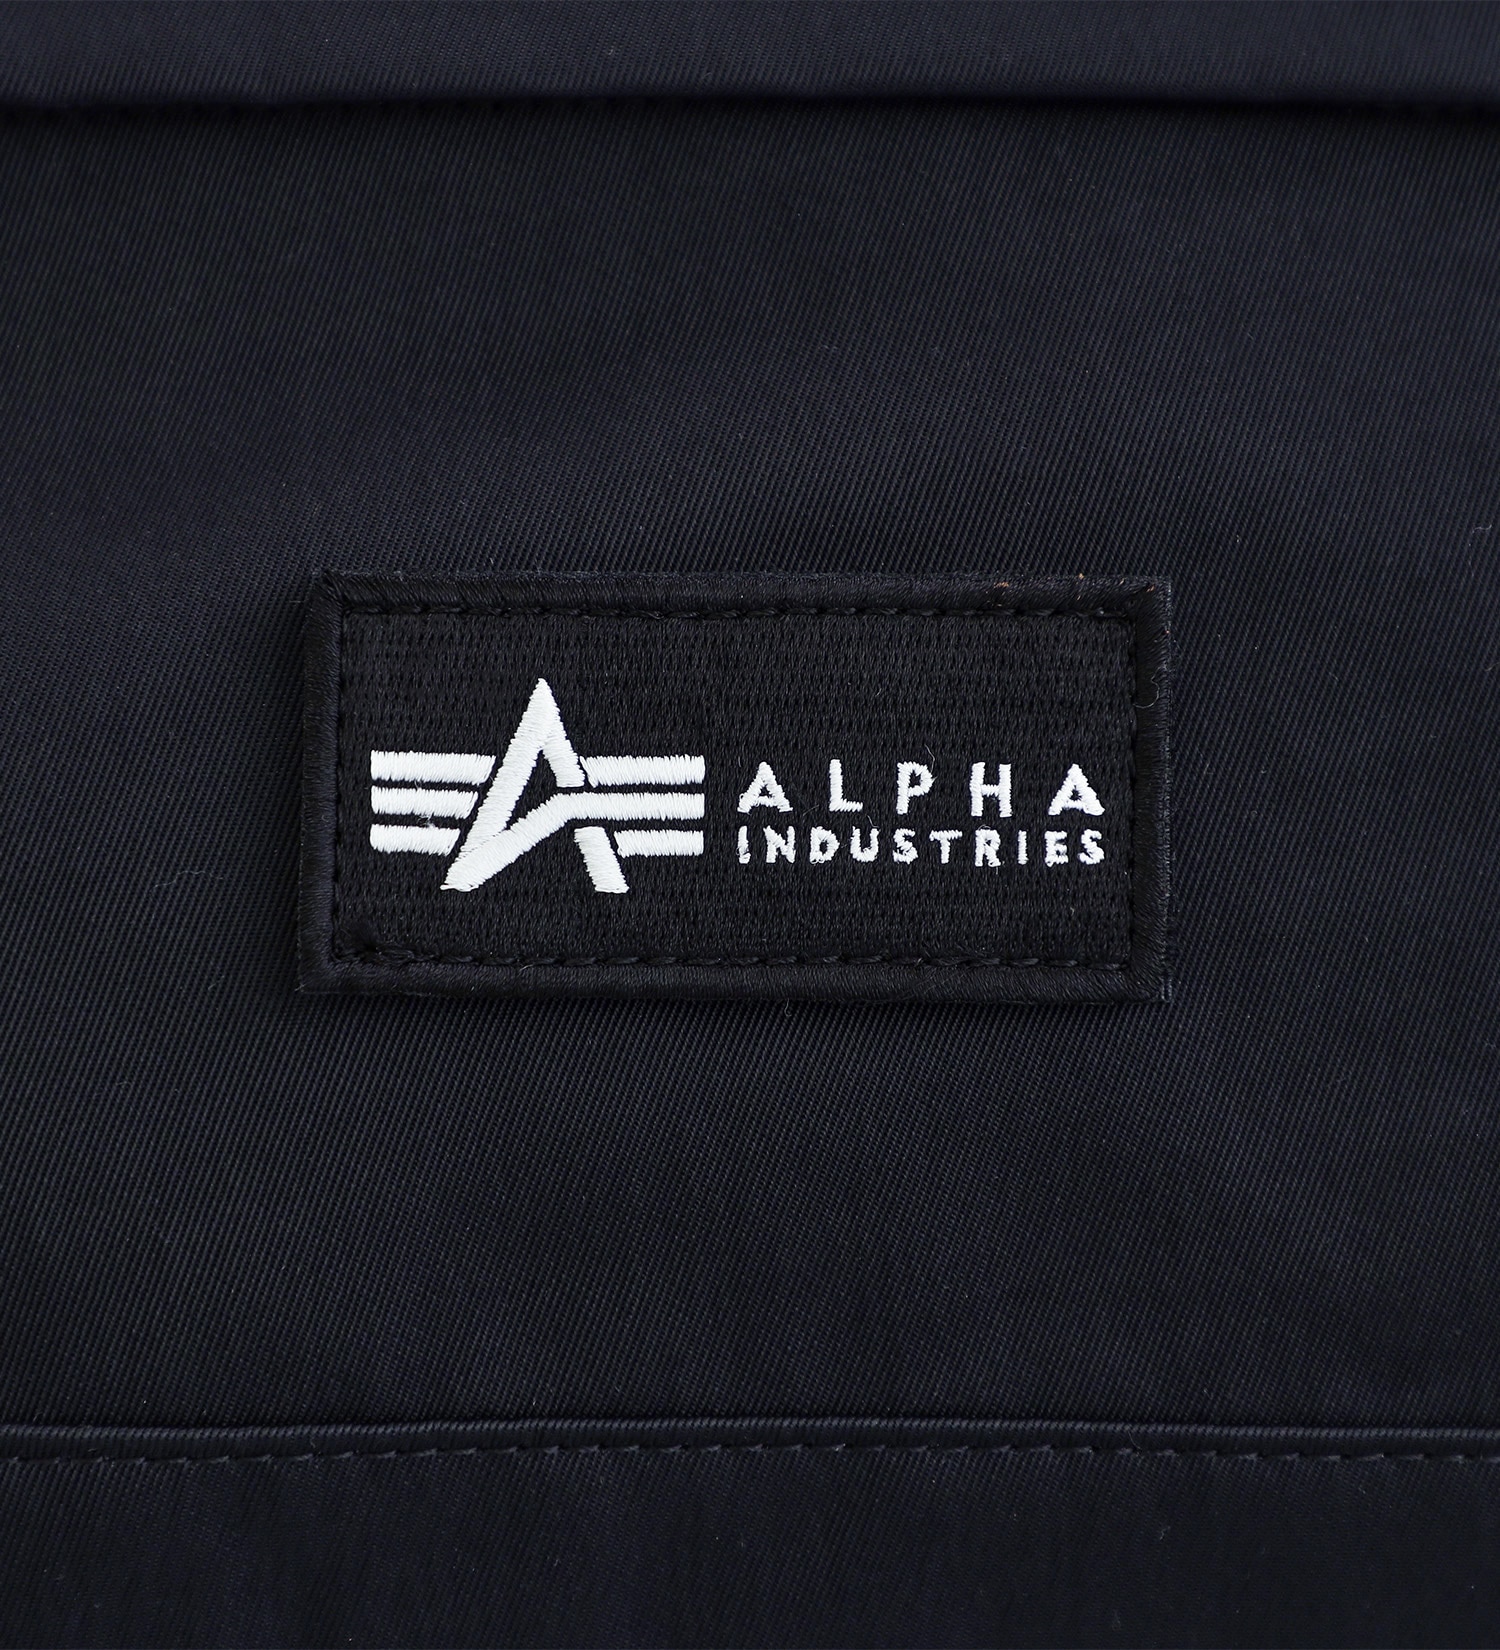 ALPHA(アルファ)のスクエアショルダーバッグ|バッグ/ショルダーバッグ/メンズ|ブラック